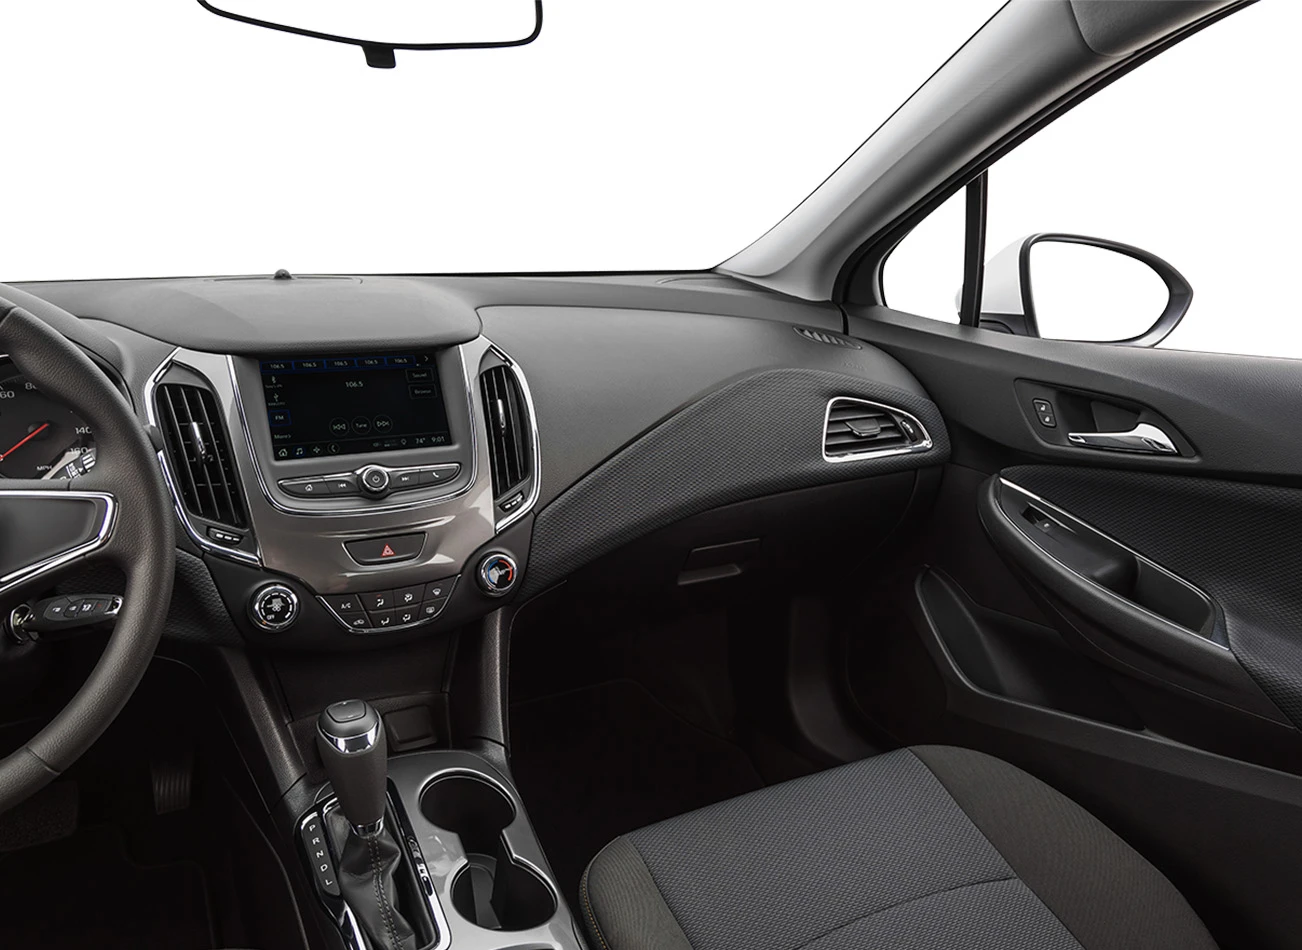 2019 Chevrolet Cruze Review: Front seats | CarMax